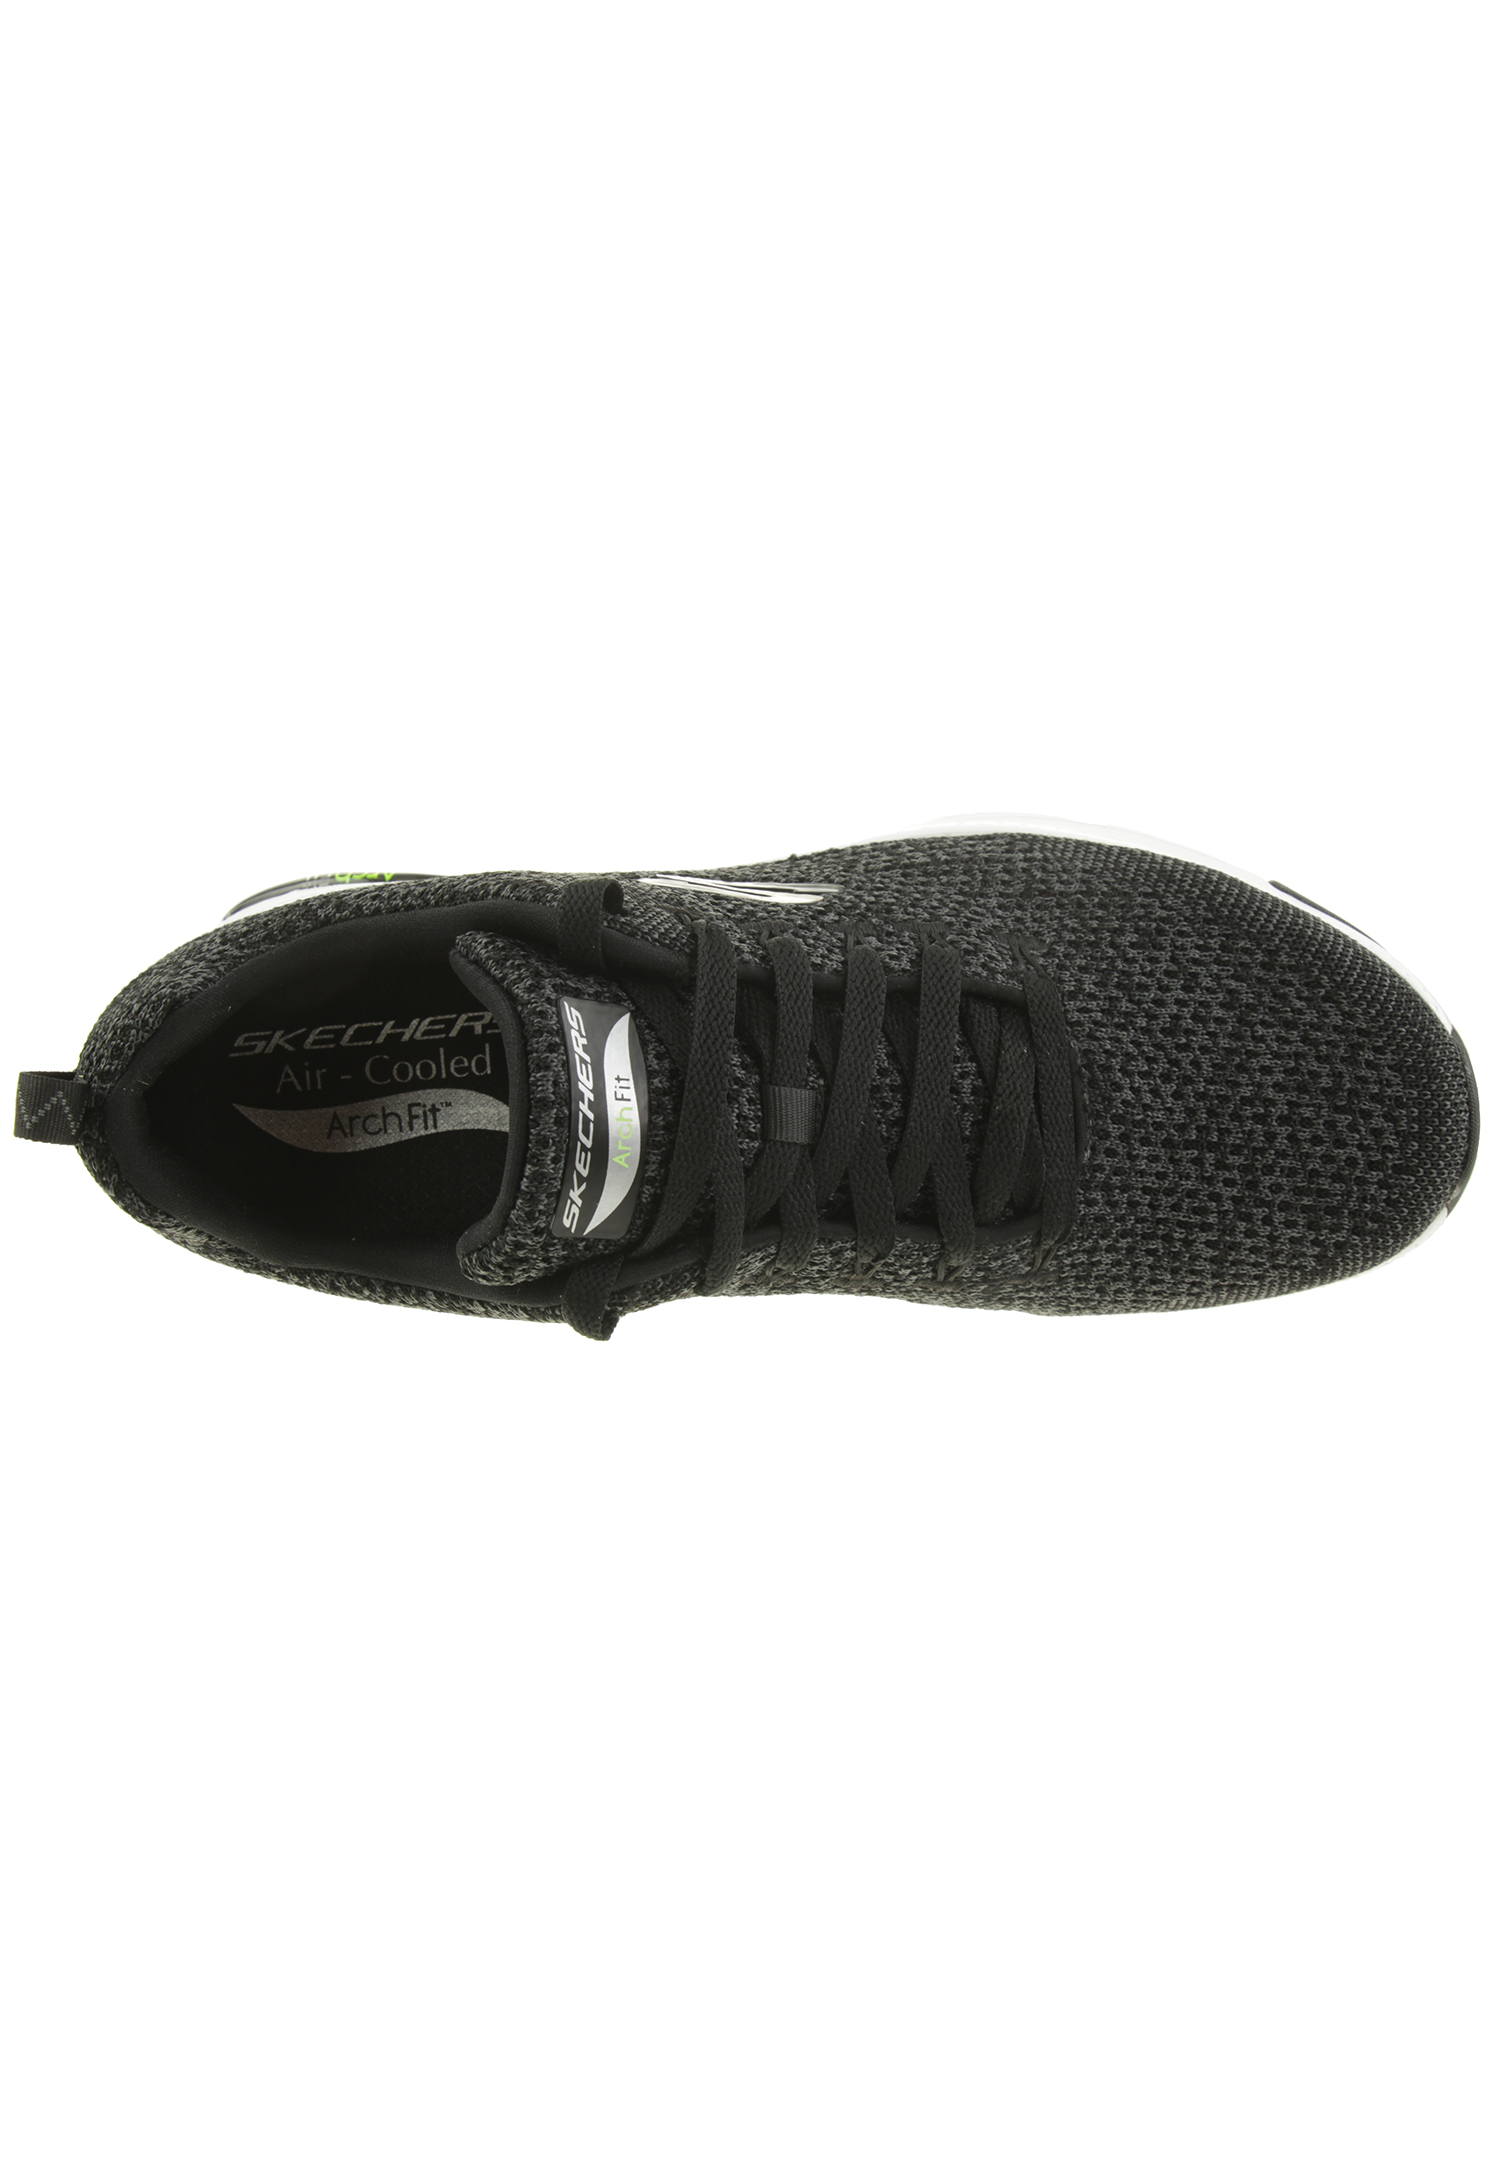 Skechers Arch-Fit PARADYME Herren Sneaker 232041 BKW schwarz/weiß